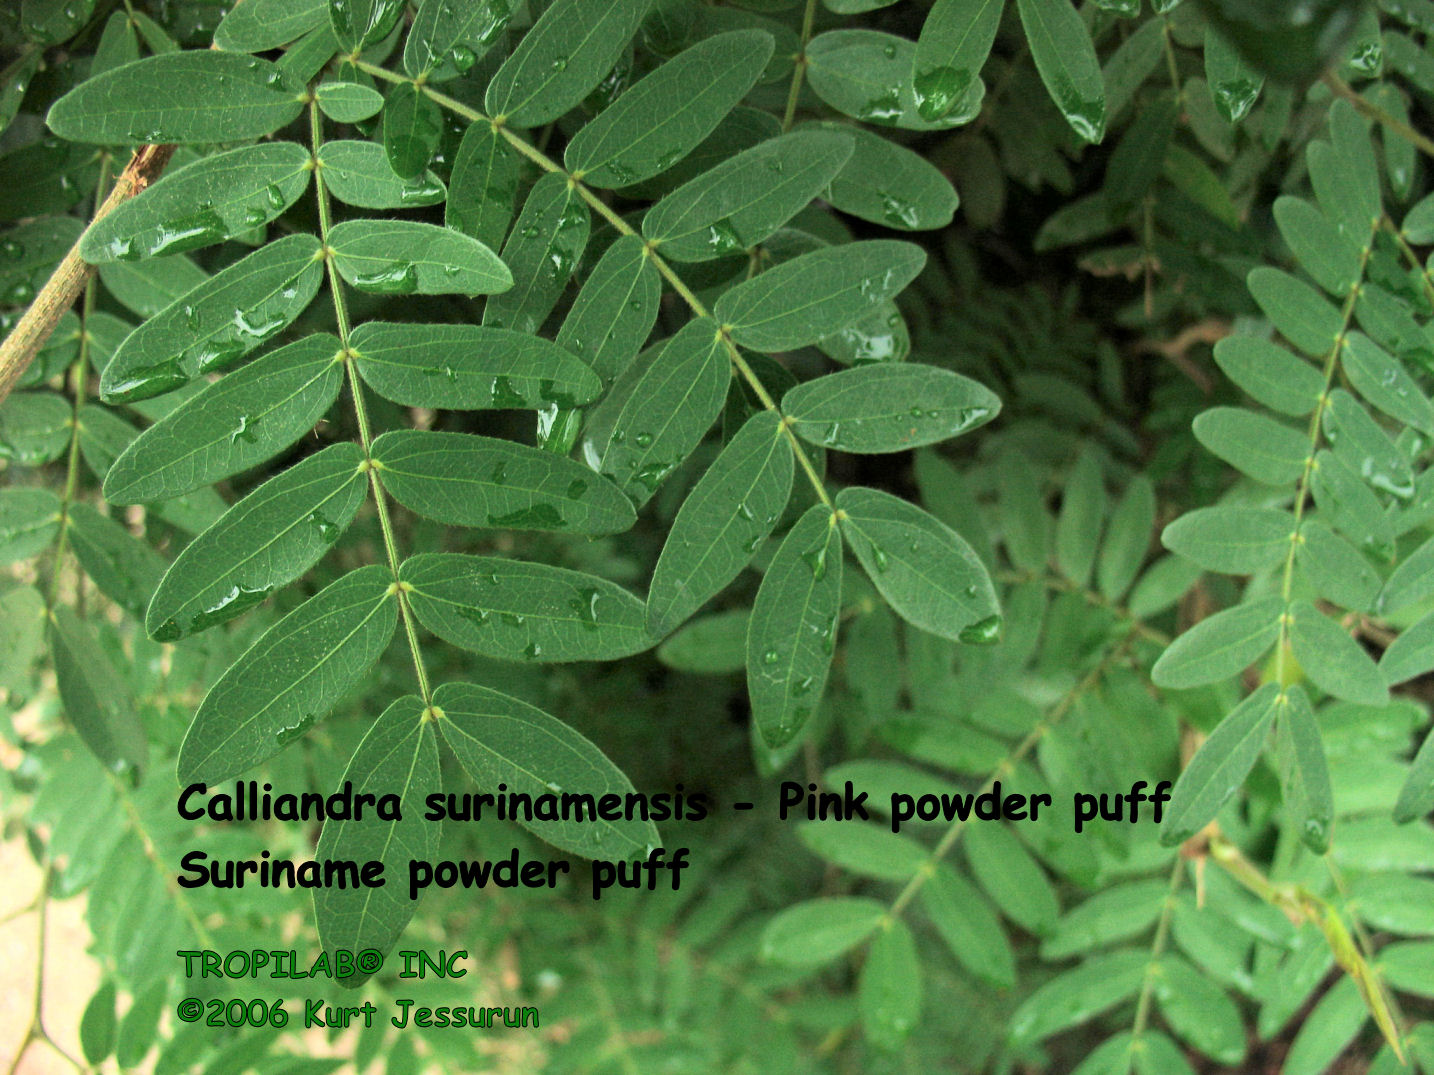 Calliandra surinamensis - Surinam powder puff